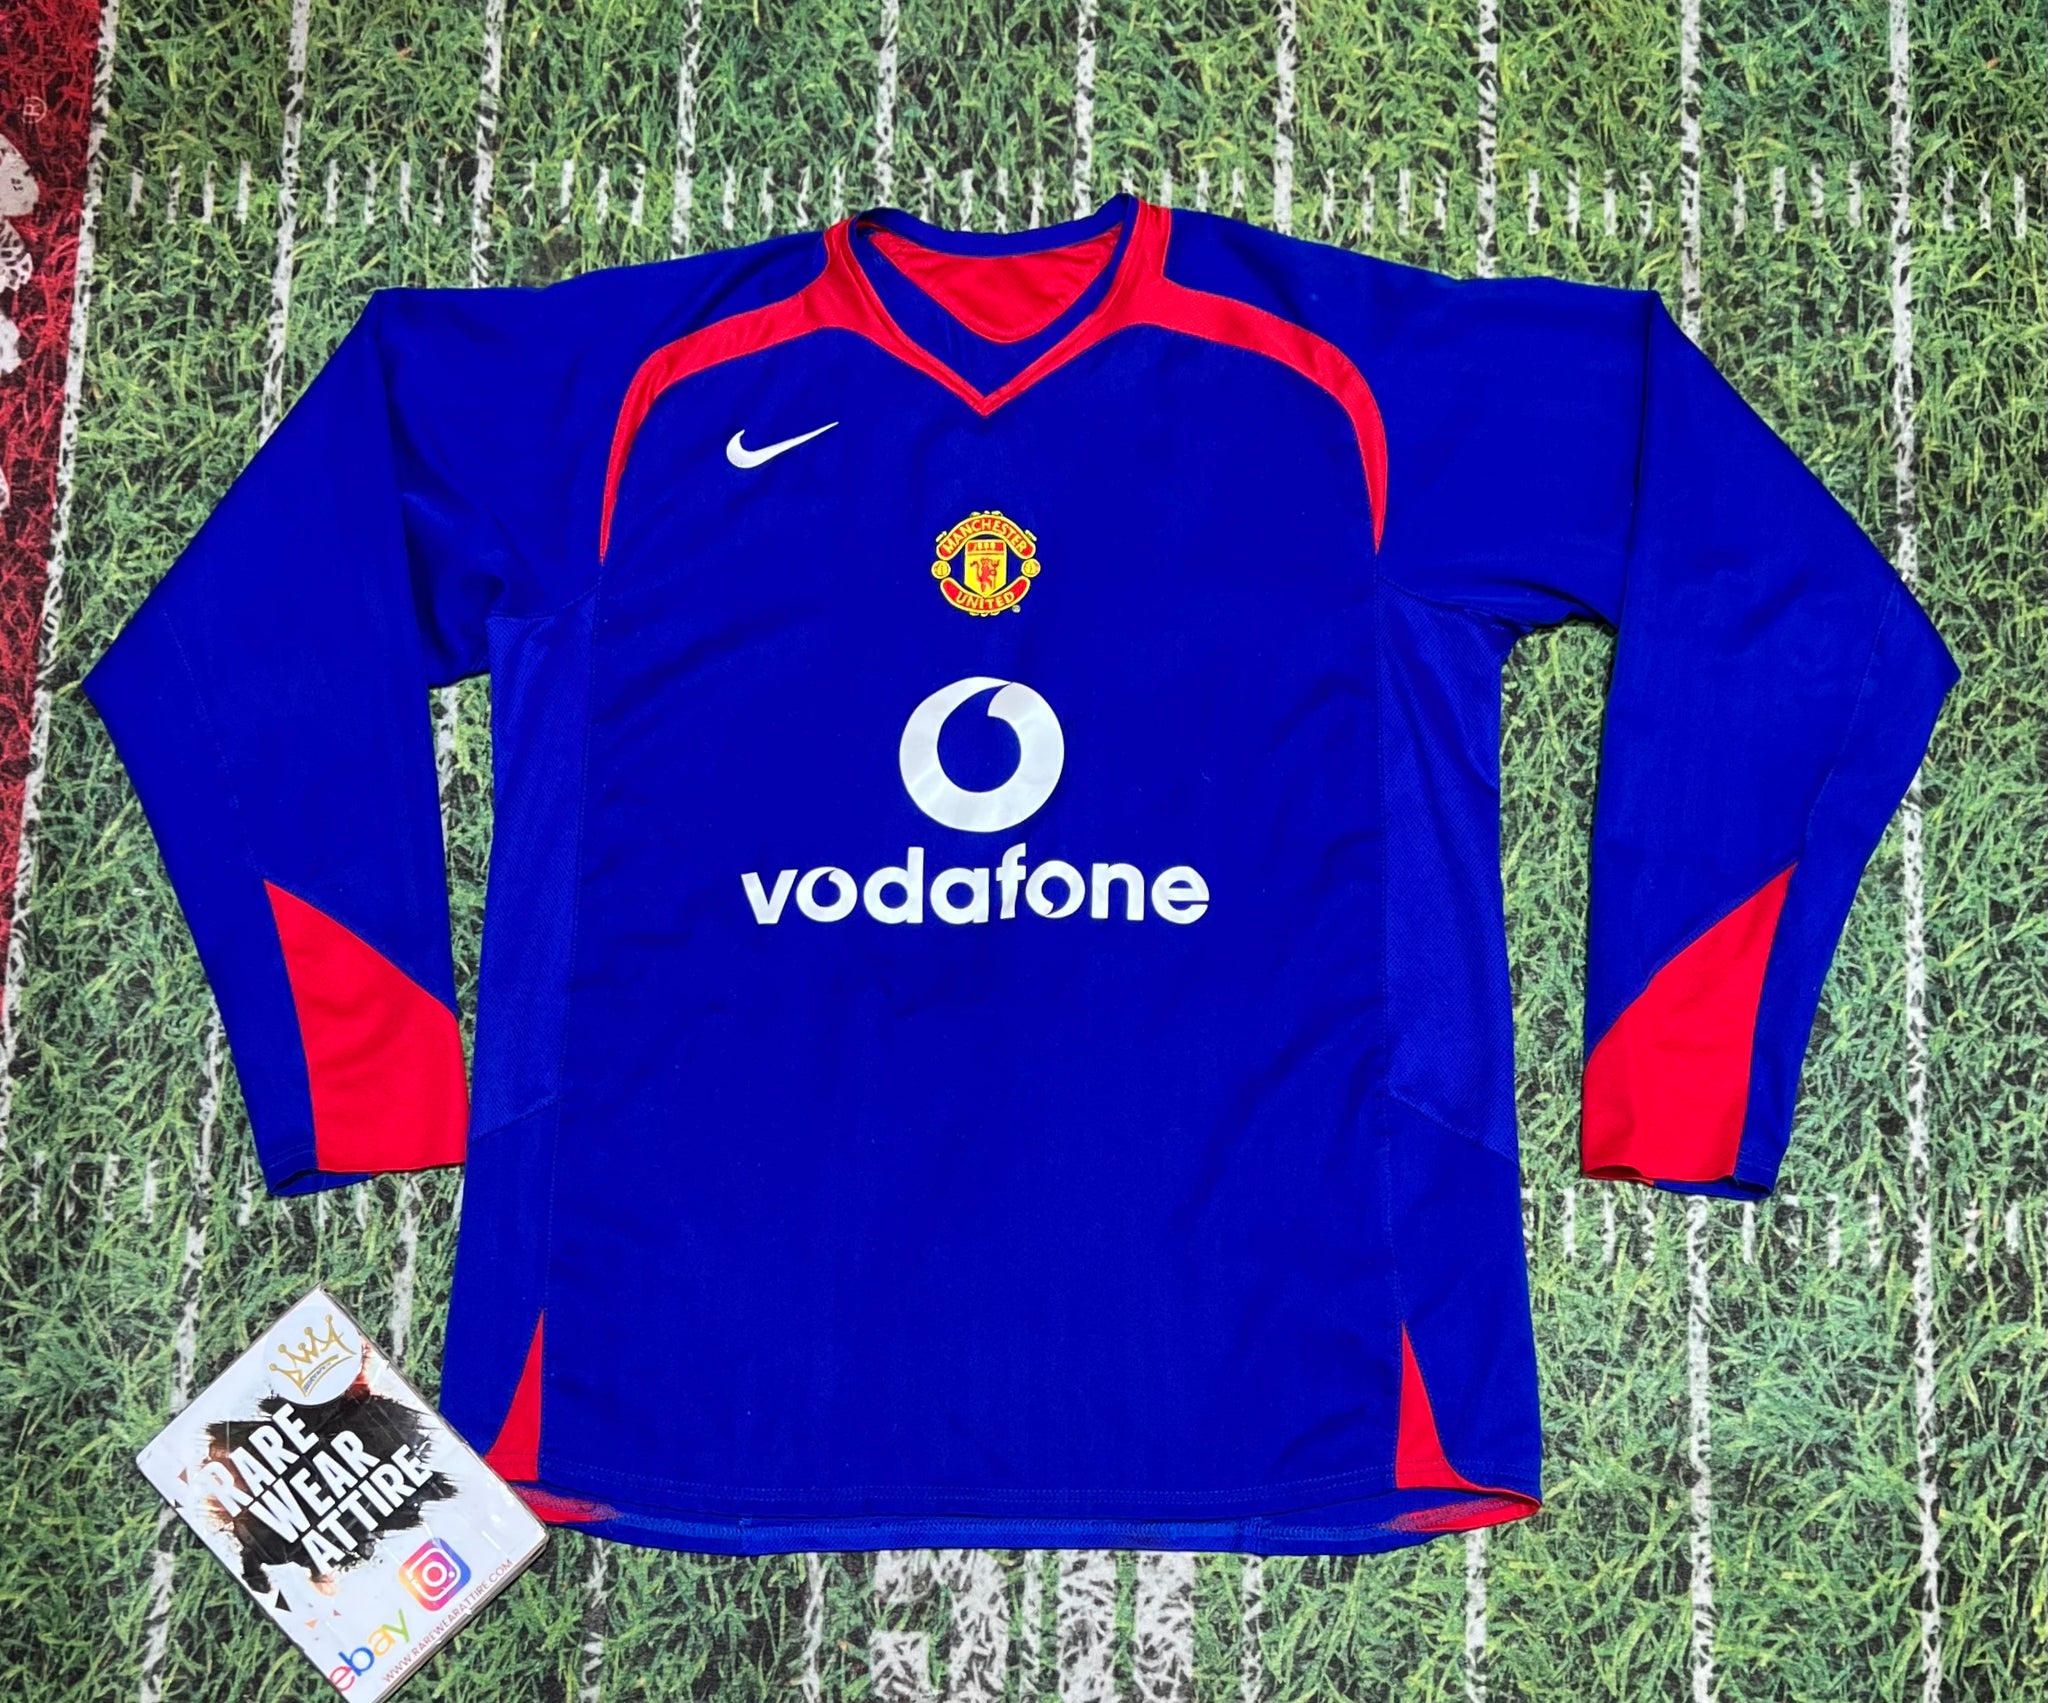 Sphere 90 Manchester Adidas Jersey size L Vodafone – Rare_Wear_Attire